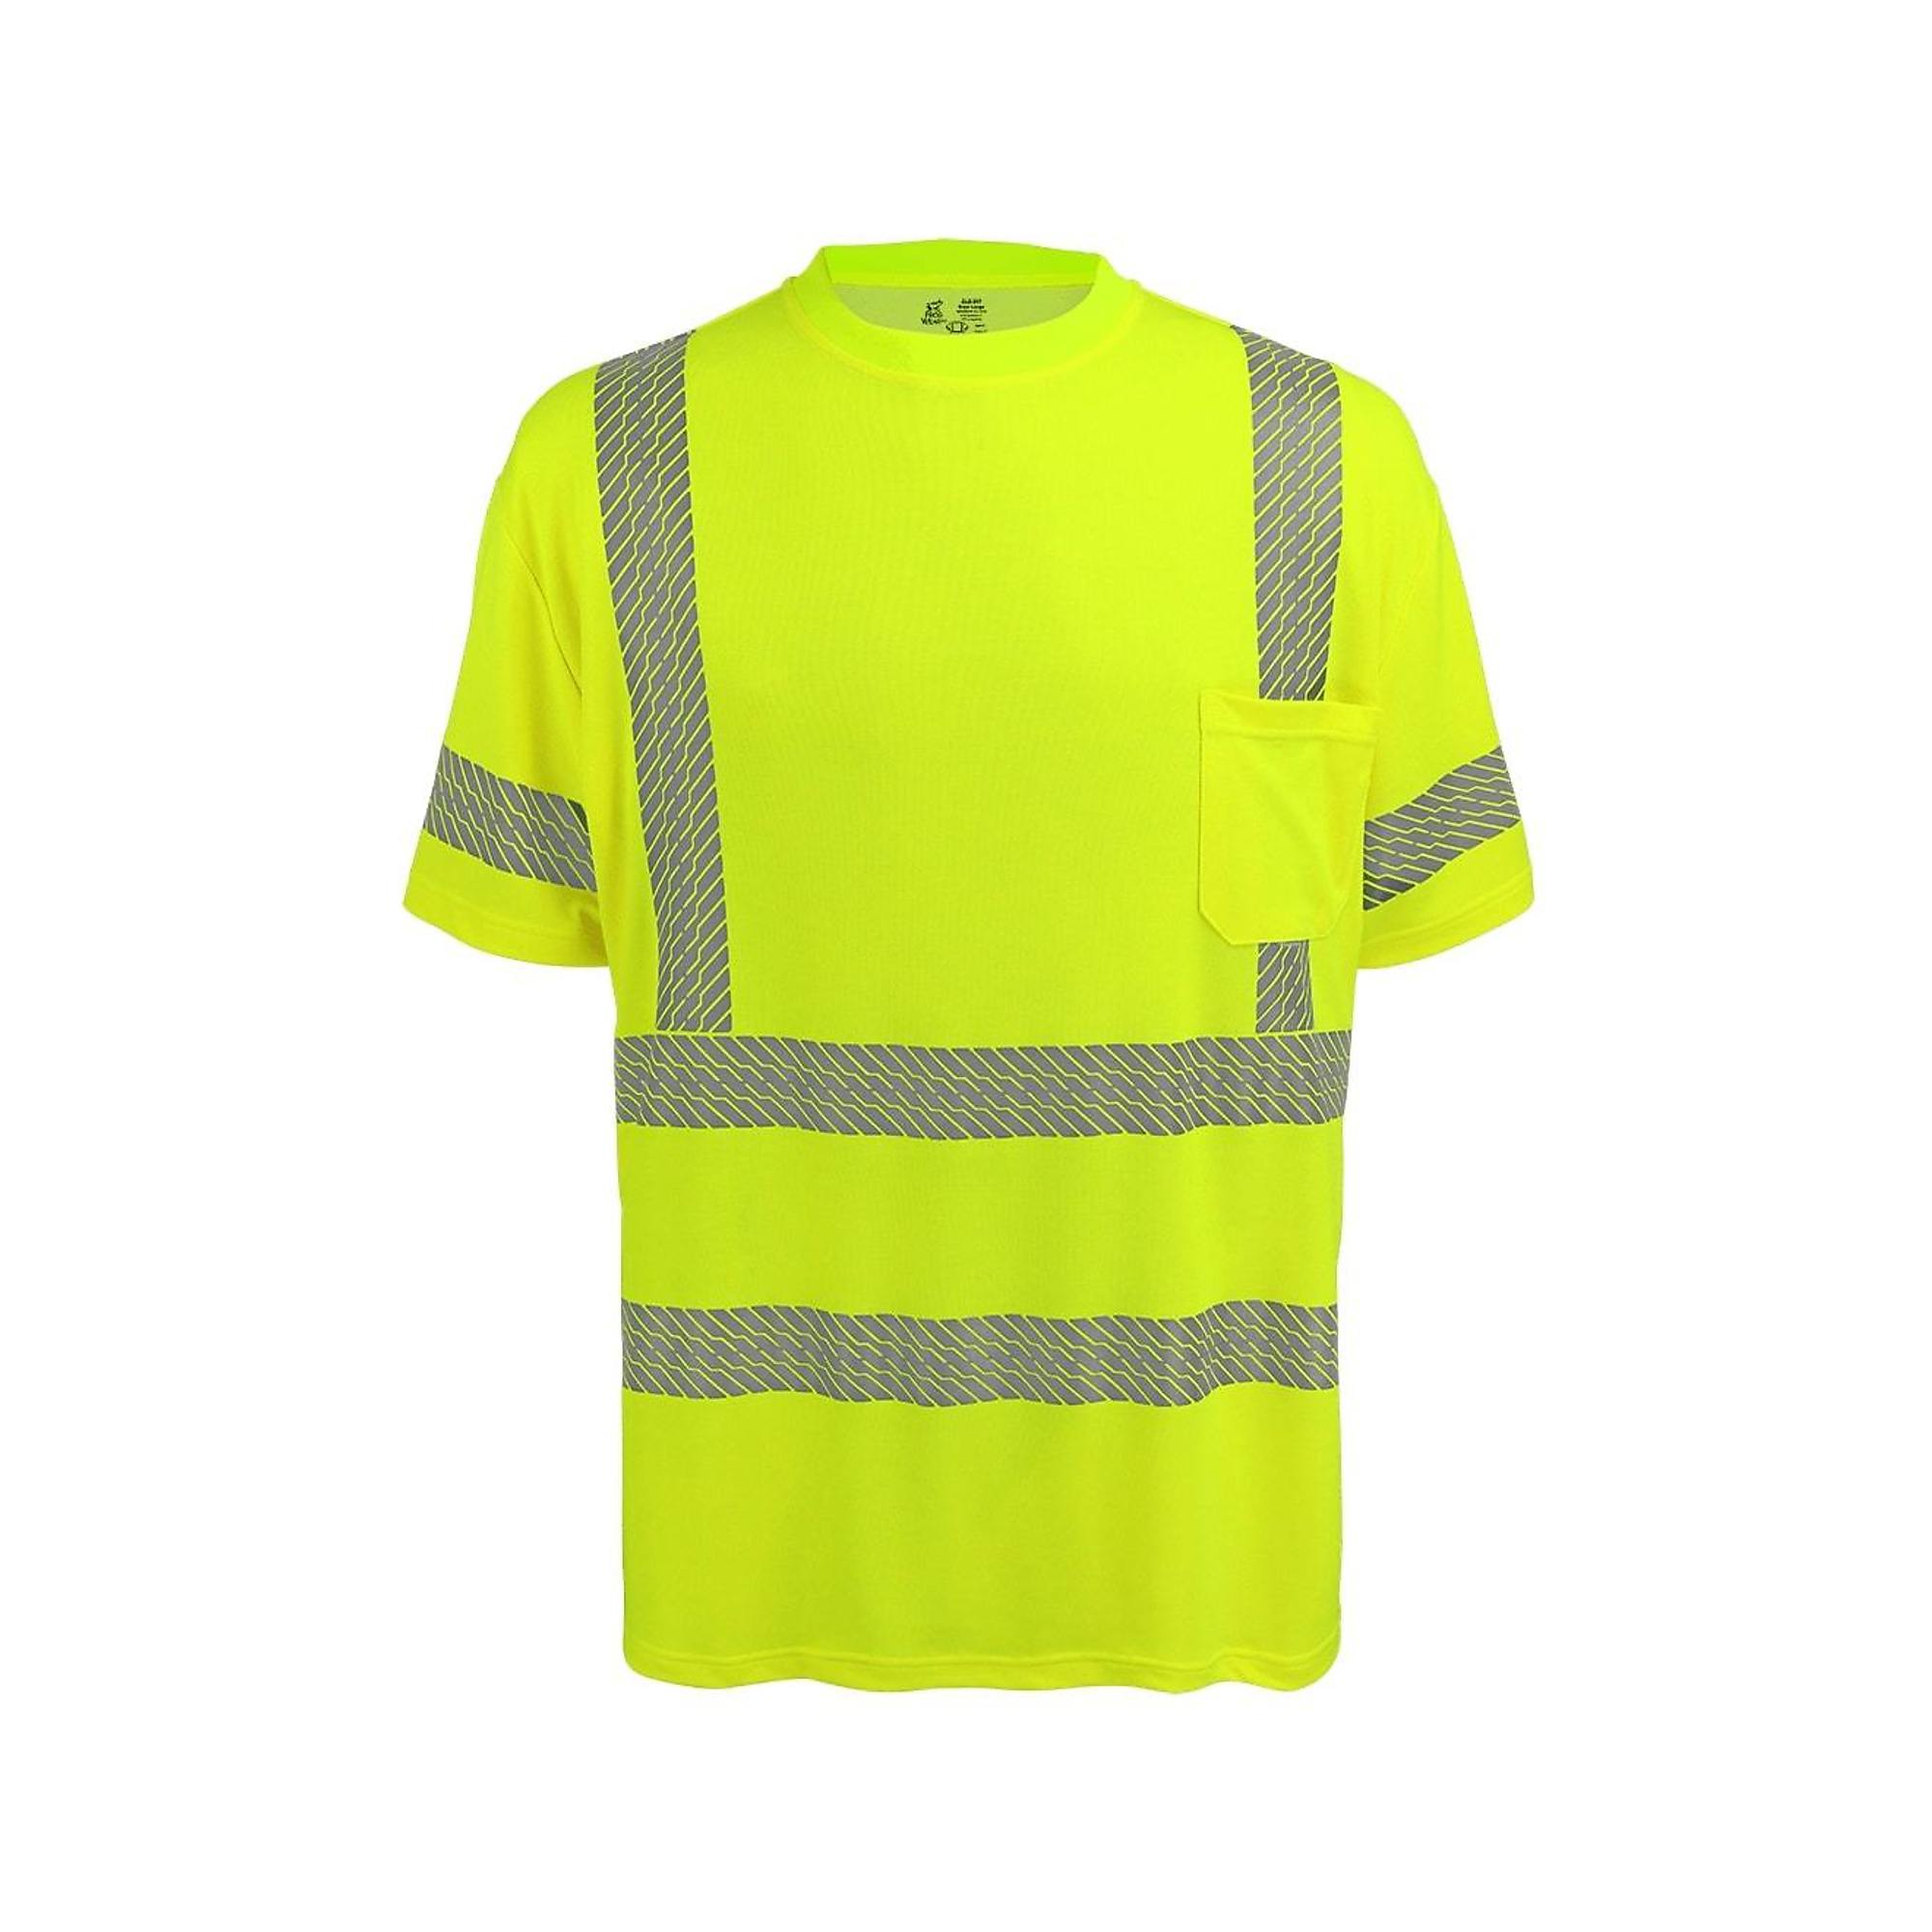 FrogWear, HV Yellow/Green,Class 3Bamboo Self-Wicking, Athletic Shirt, Size 4XL, Model GLO-217-4XL